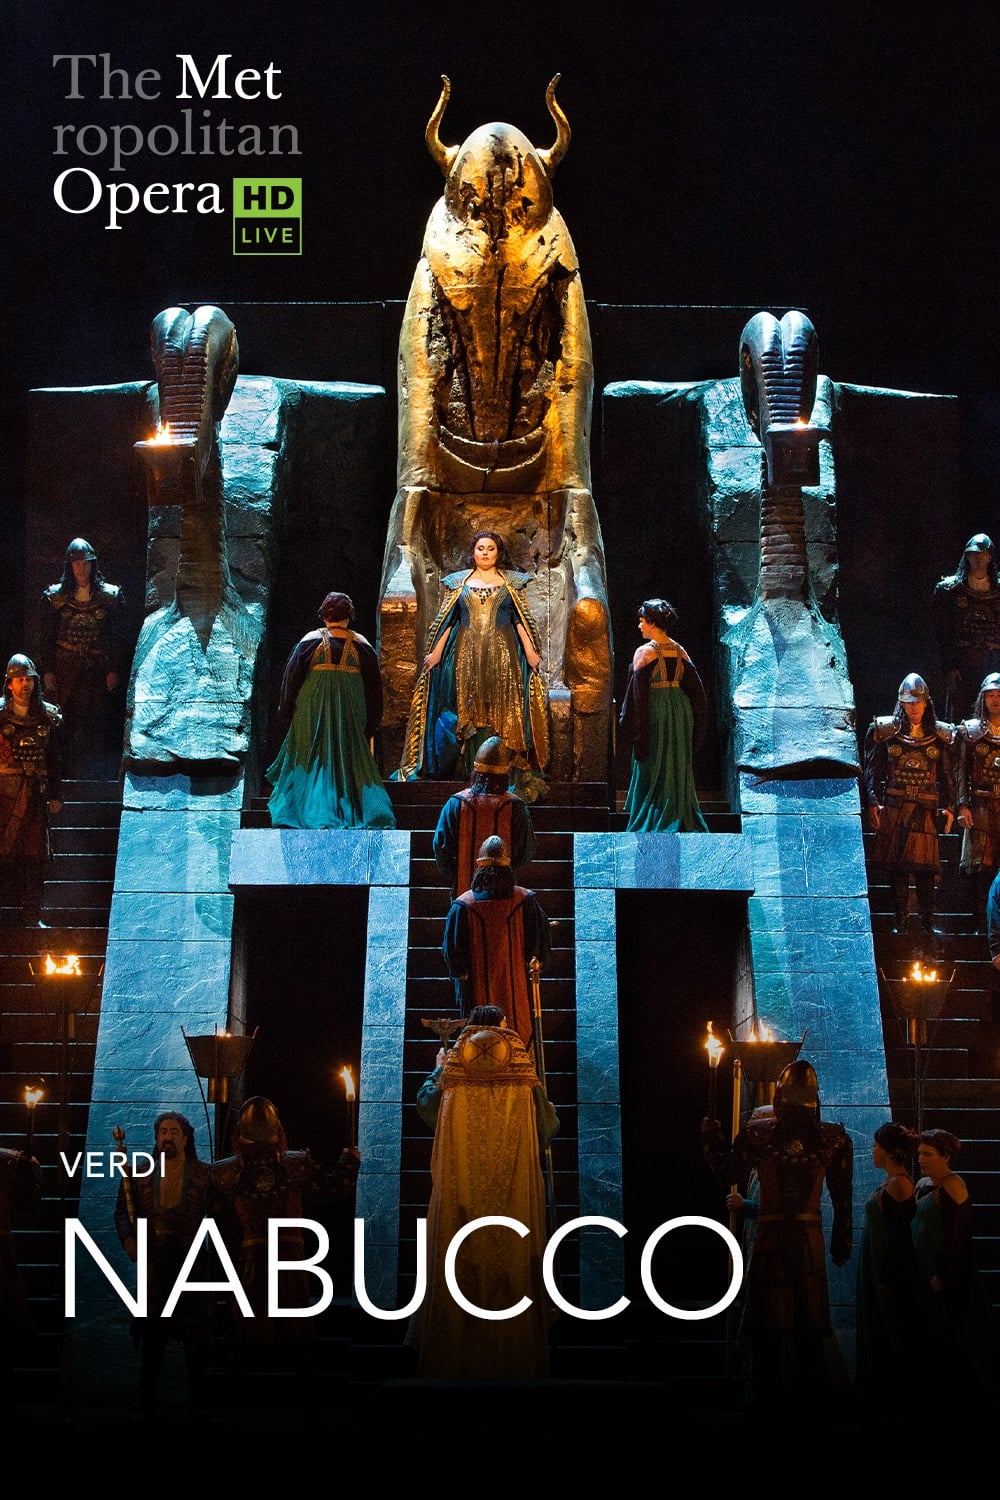 Poster for the movie "The Metropolitan Opera: Nabucco"